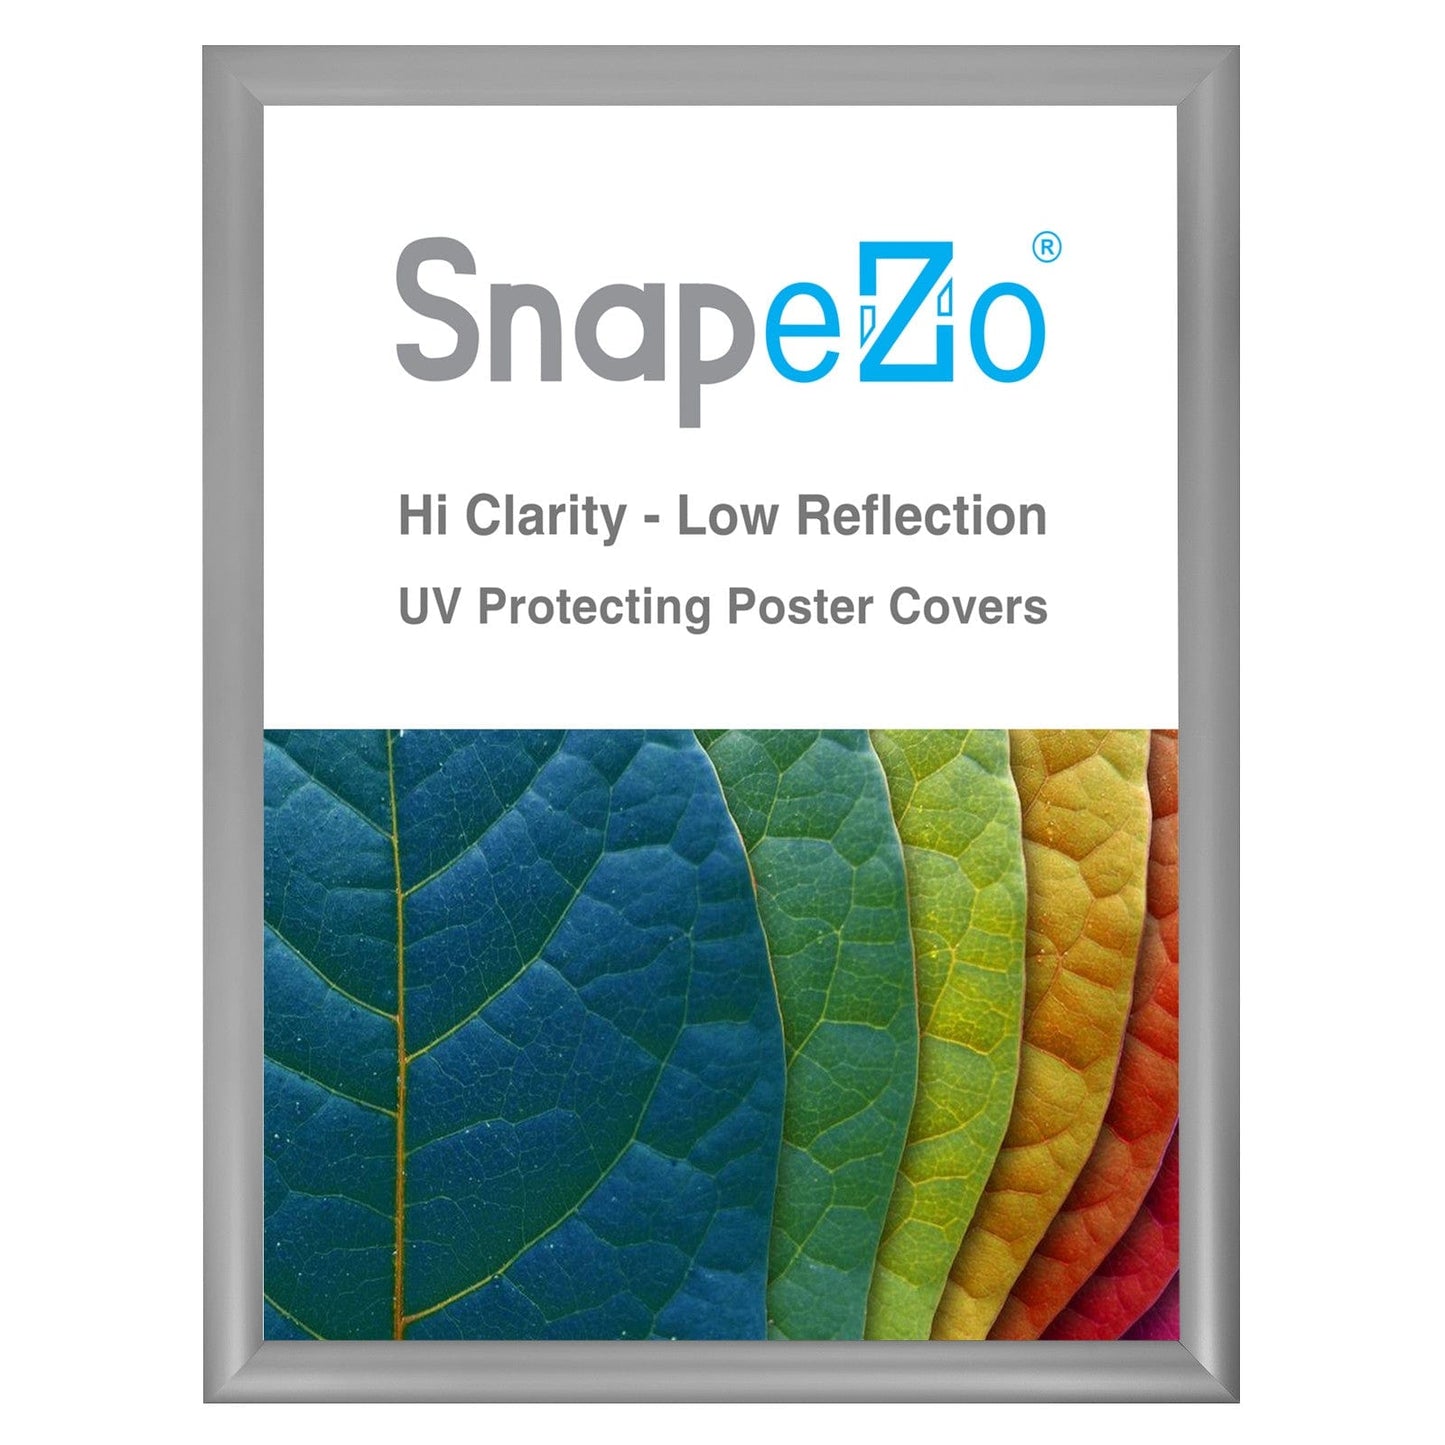 12x16 Silver SnapeZo® Snap Frame - 1.2" Profile - Snap Frames Direct